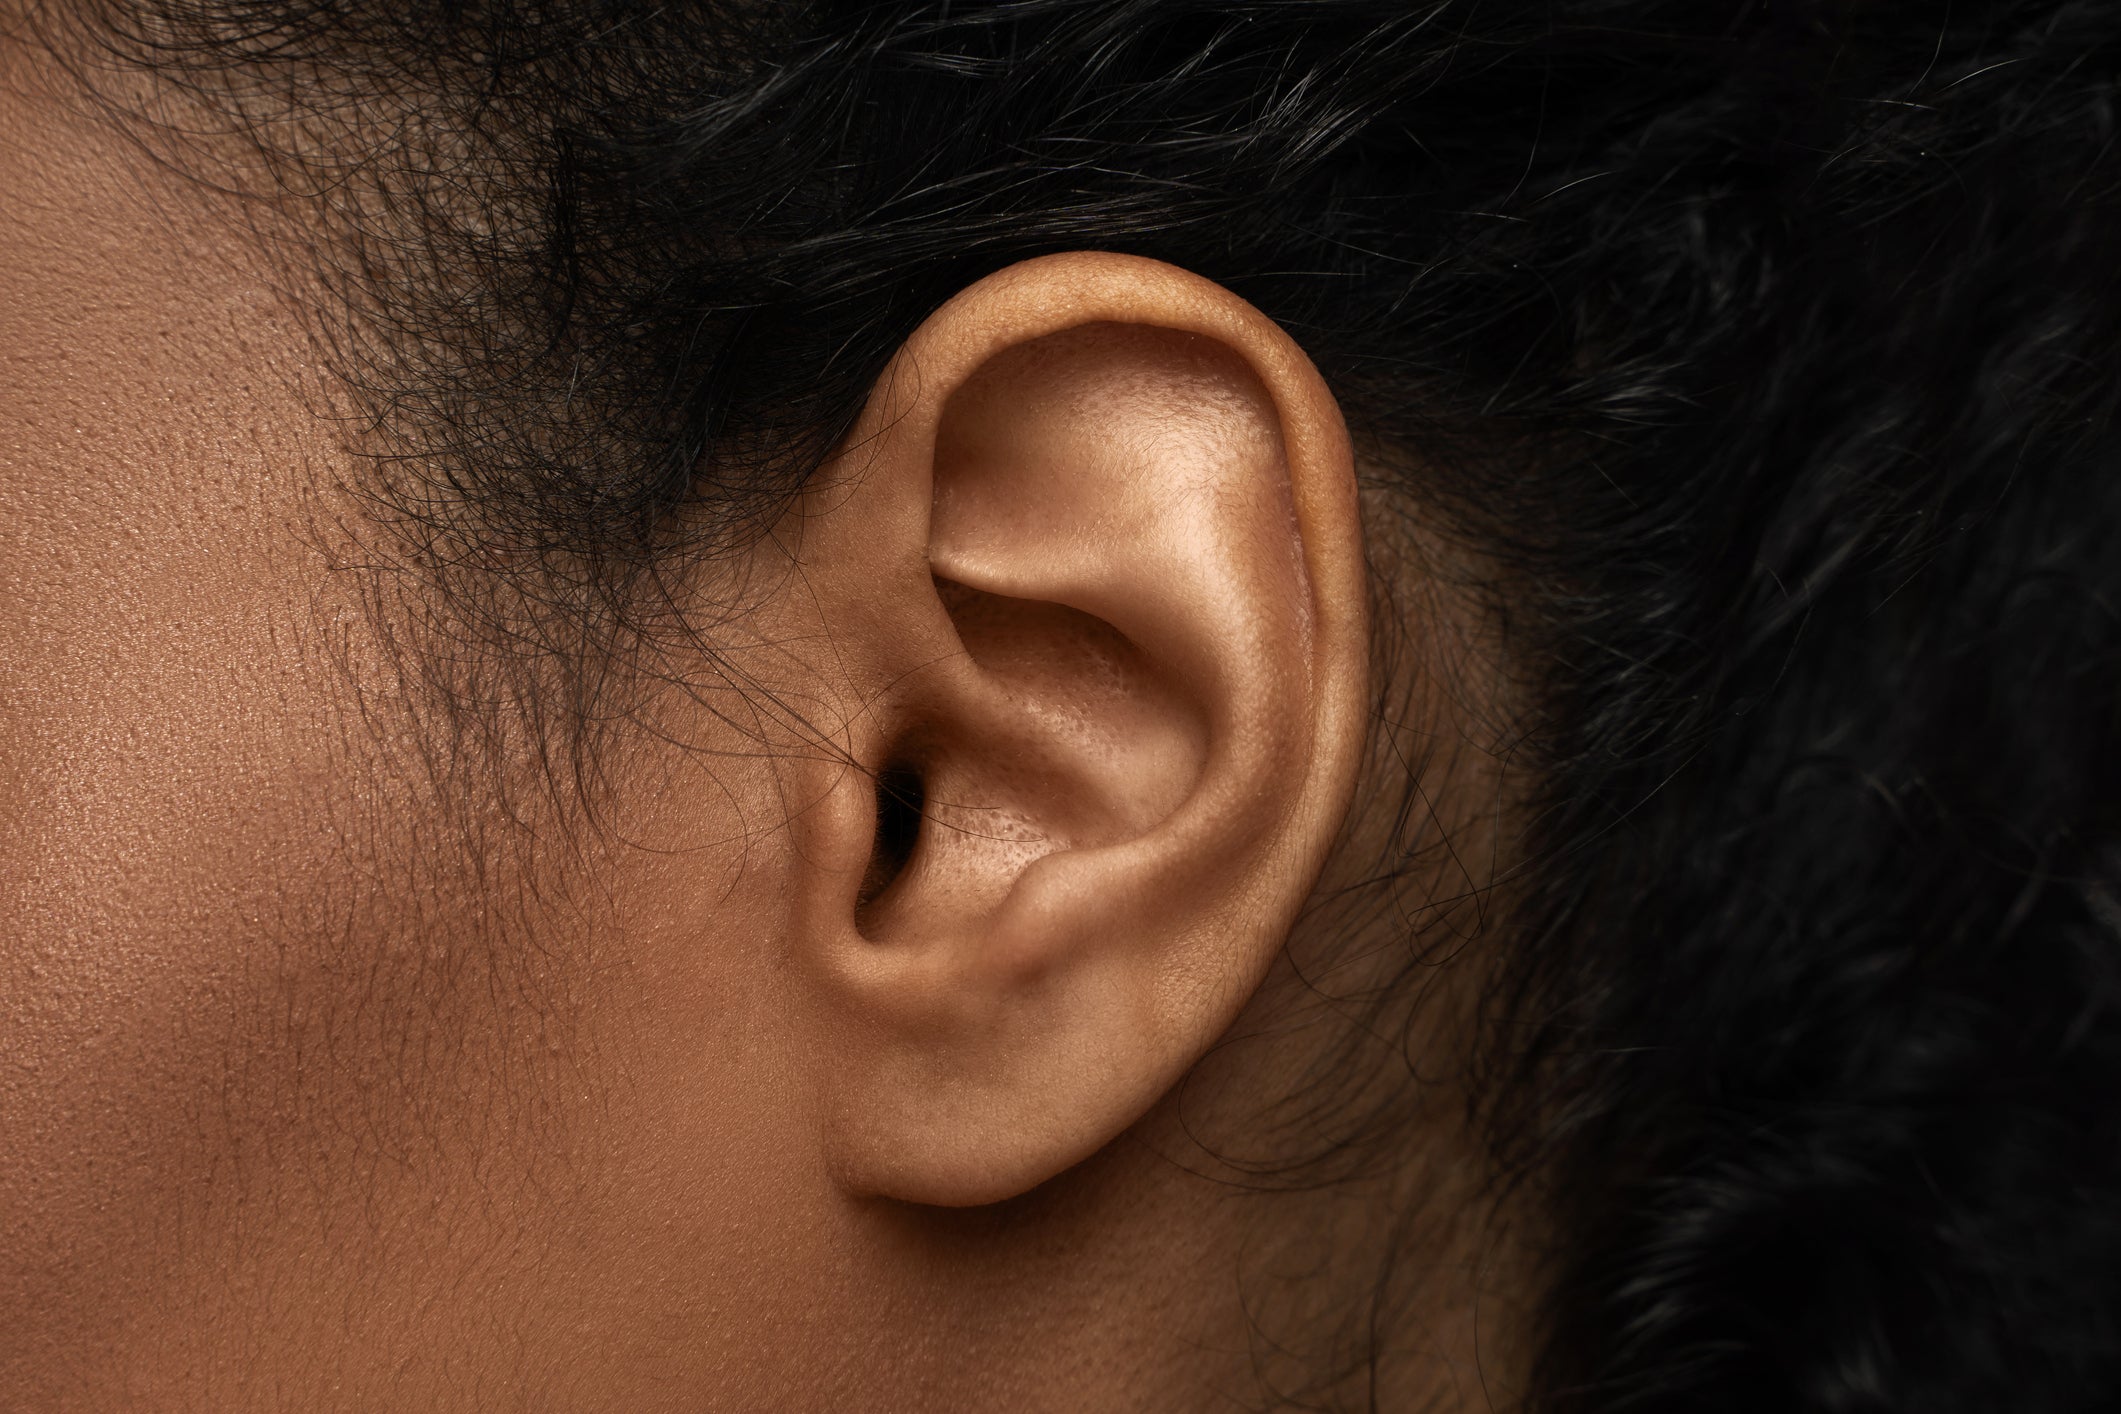 Closeup view of black female ear.